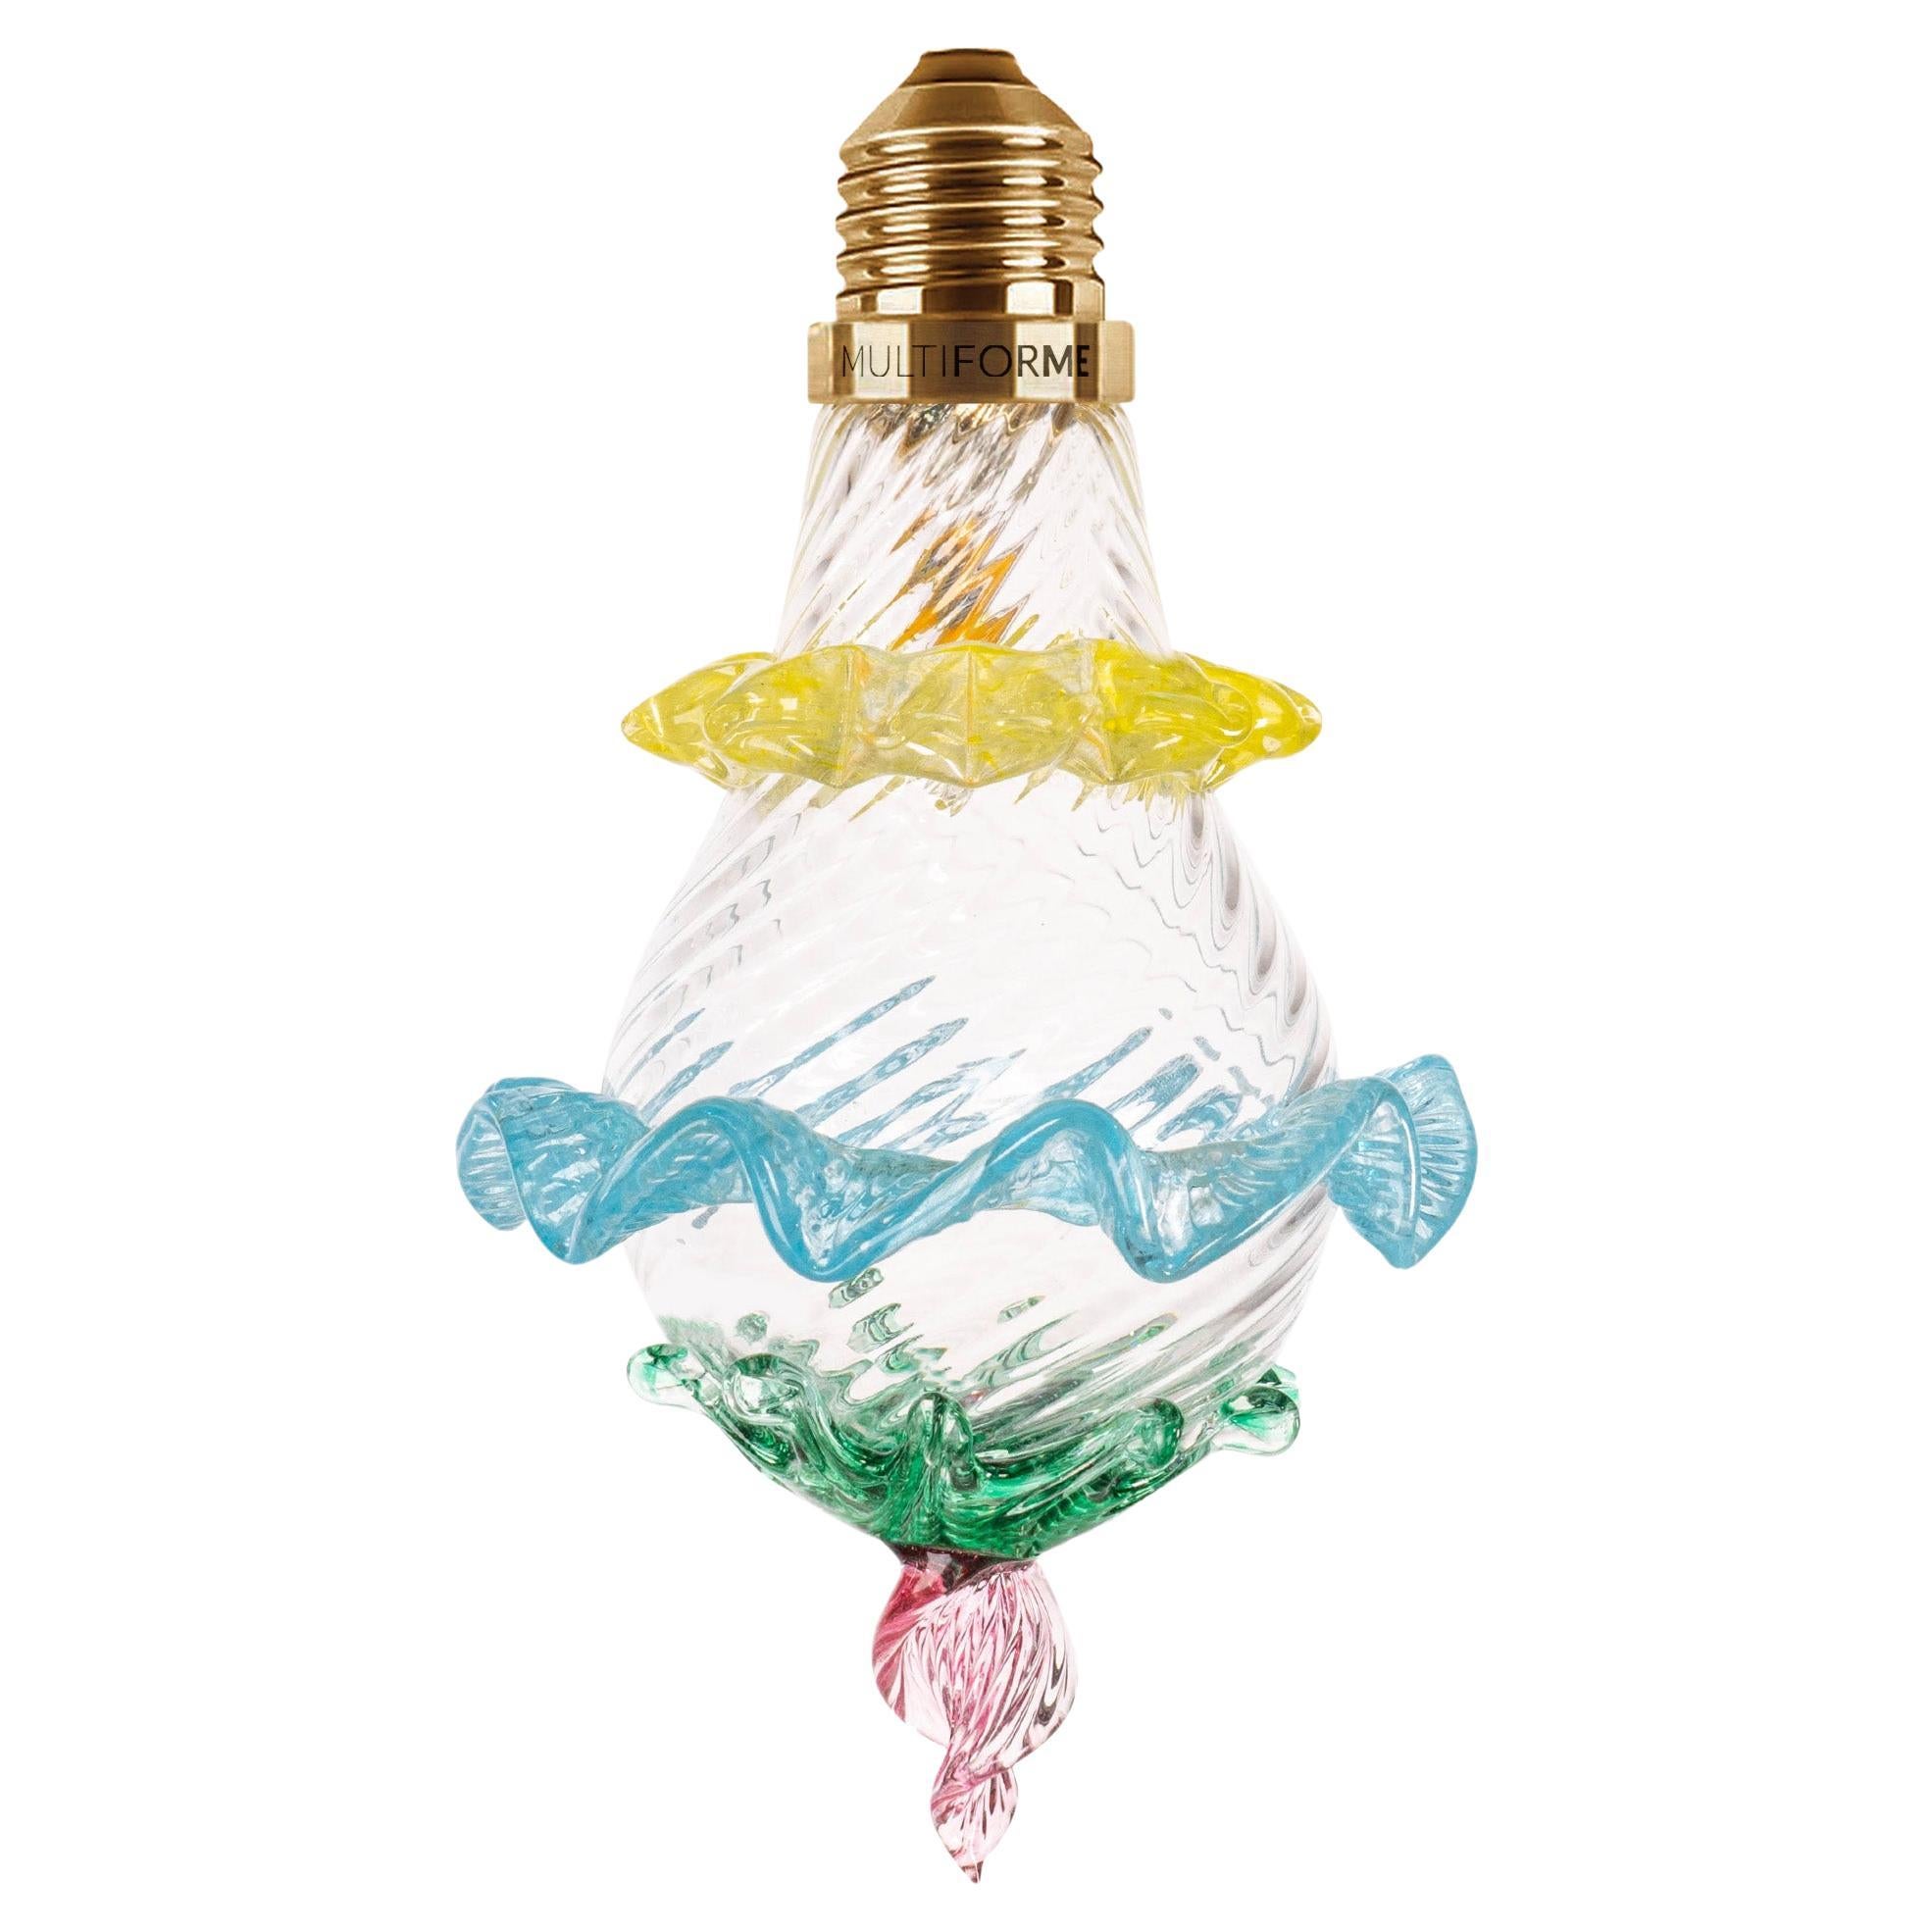 Artistic glass lightbulb chandelier Murano Bulb Marcantonio X Multiforme #03 For Sale